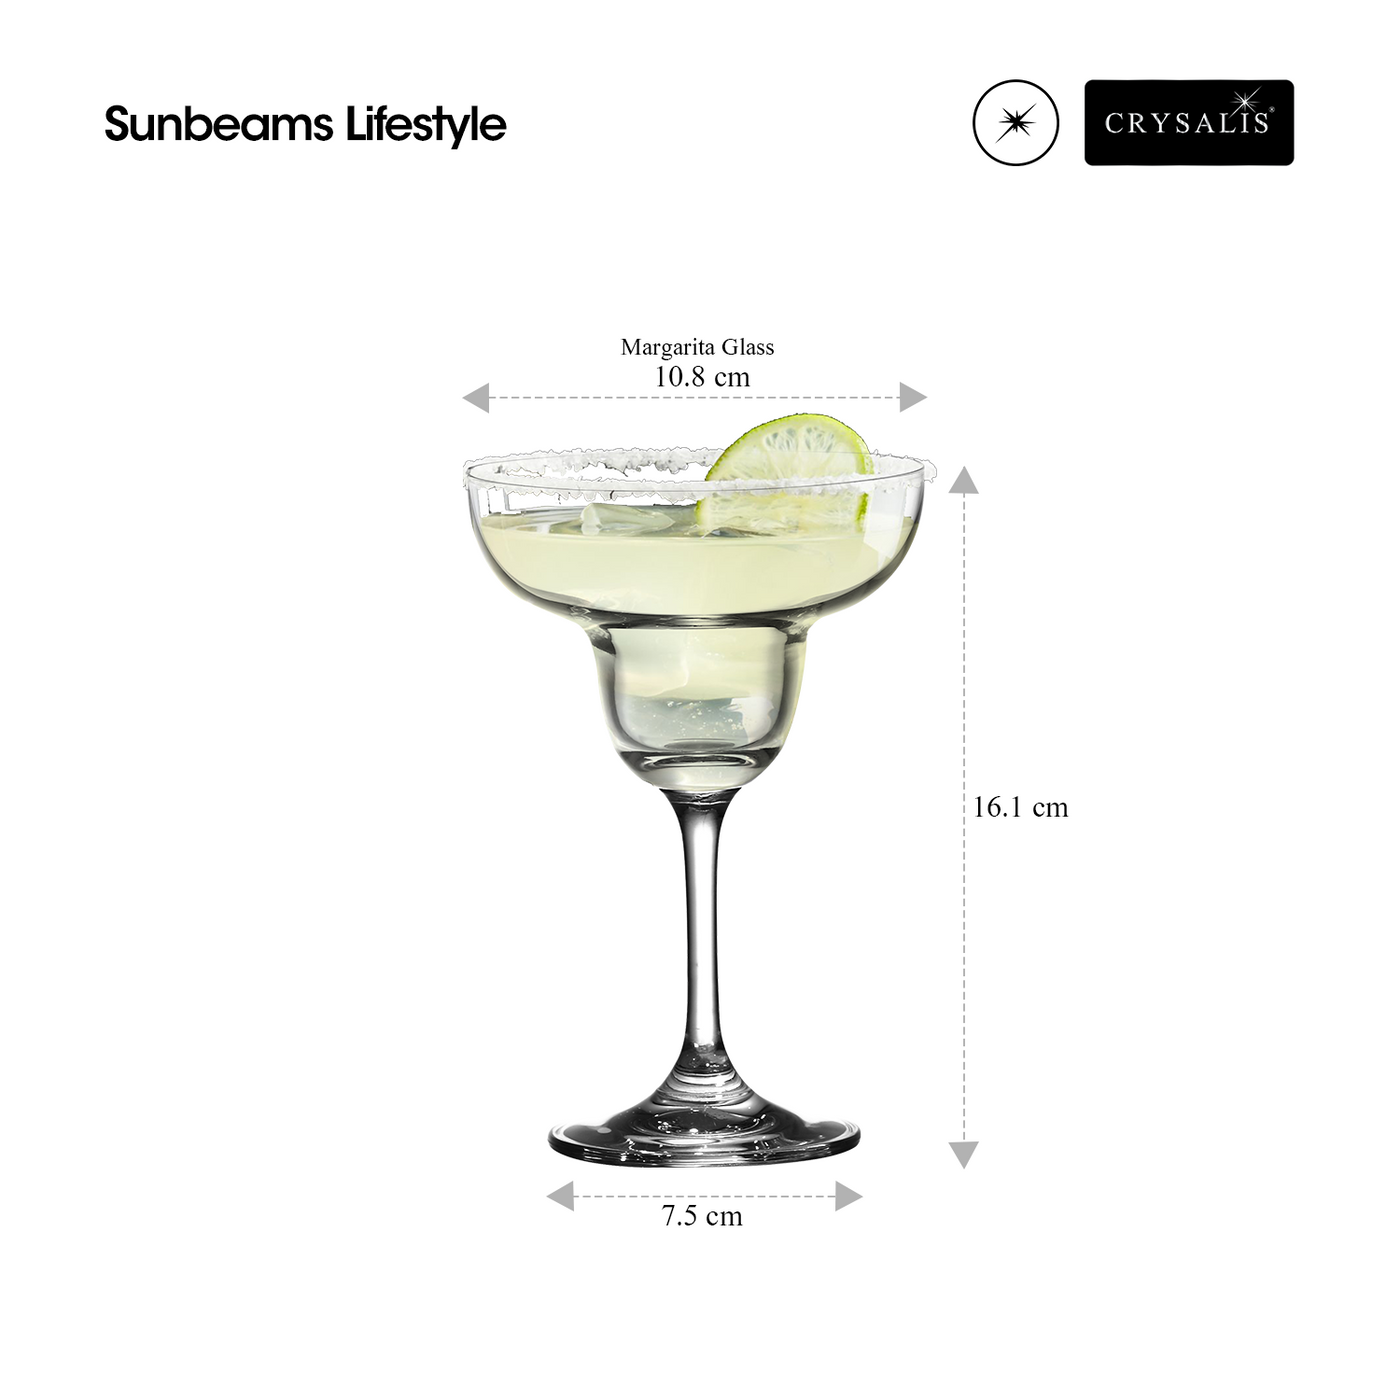 CRYSALIS Premium Crystal Stemware Margarita Glass [Set of 2] Cocktail Glass